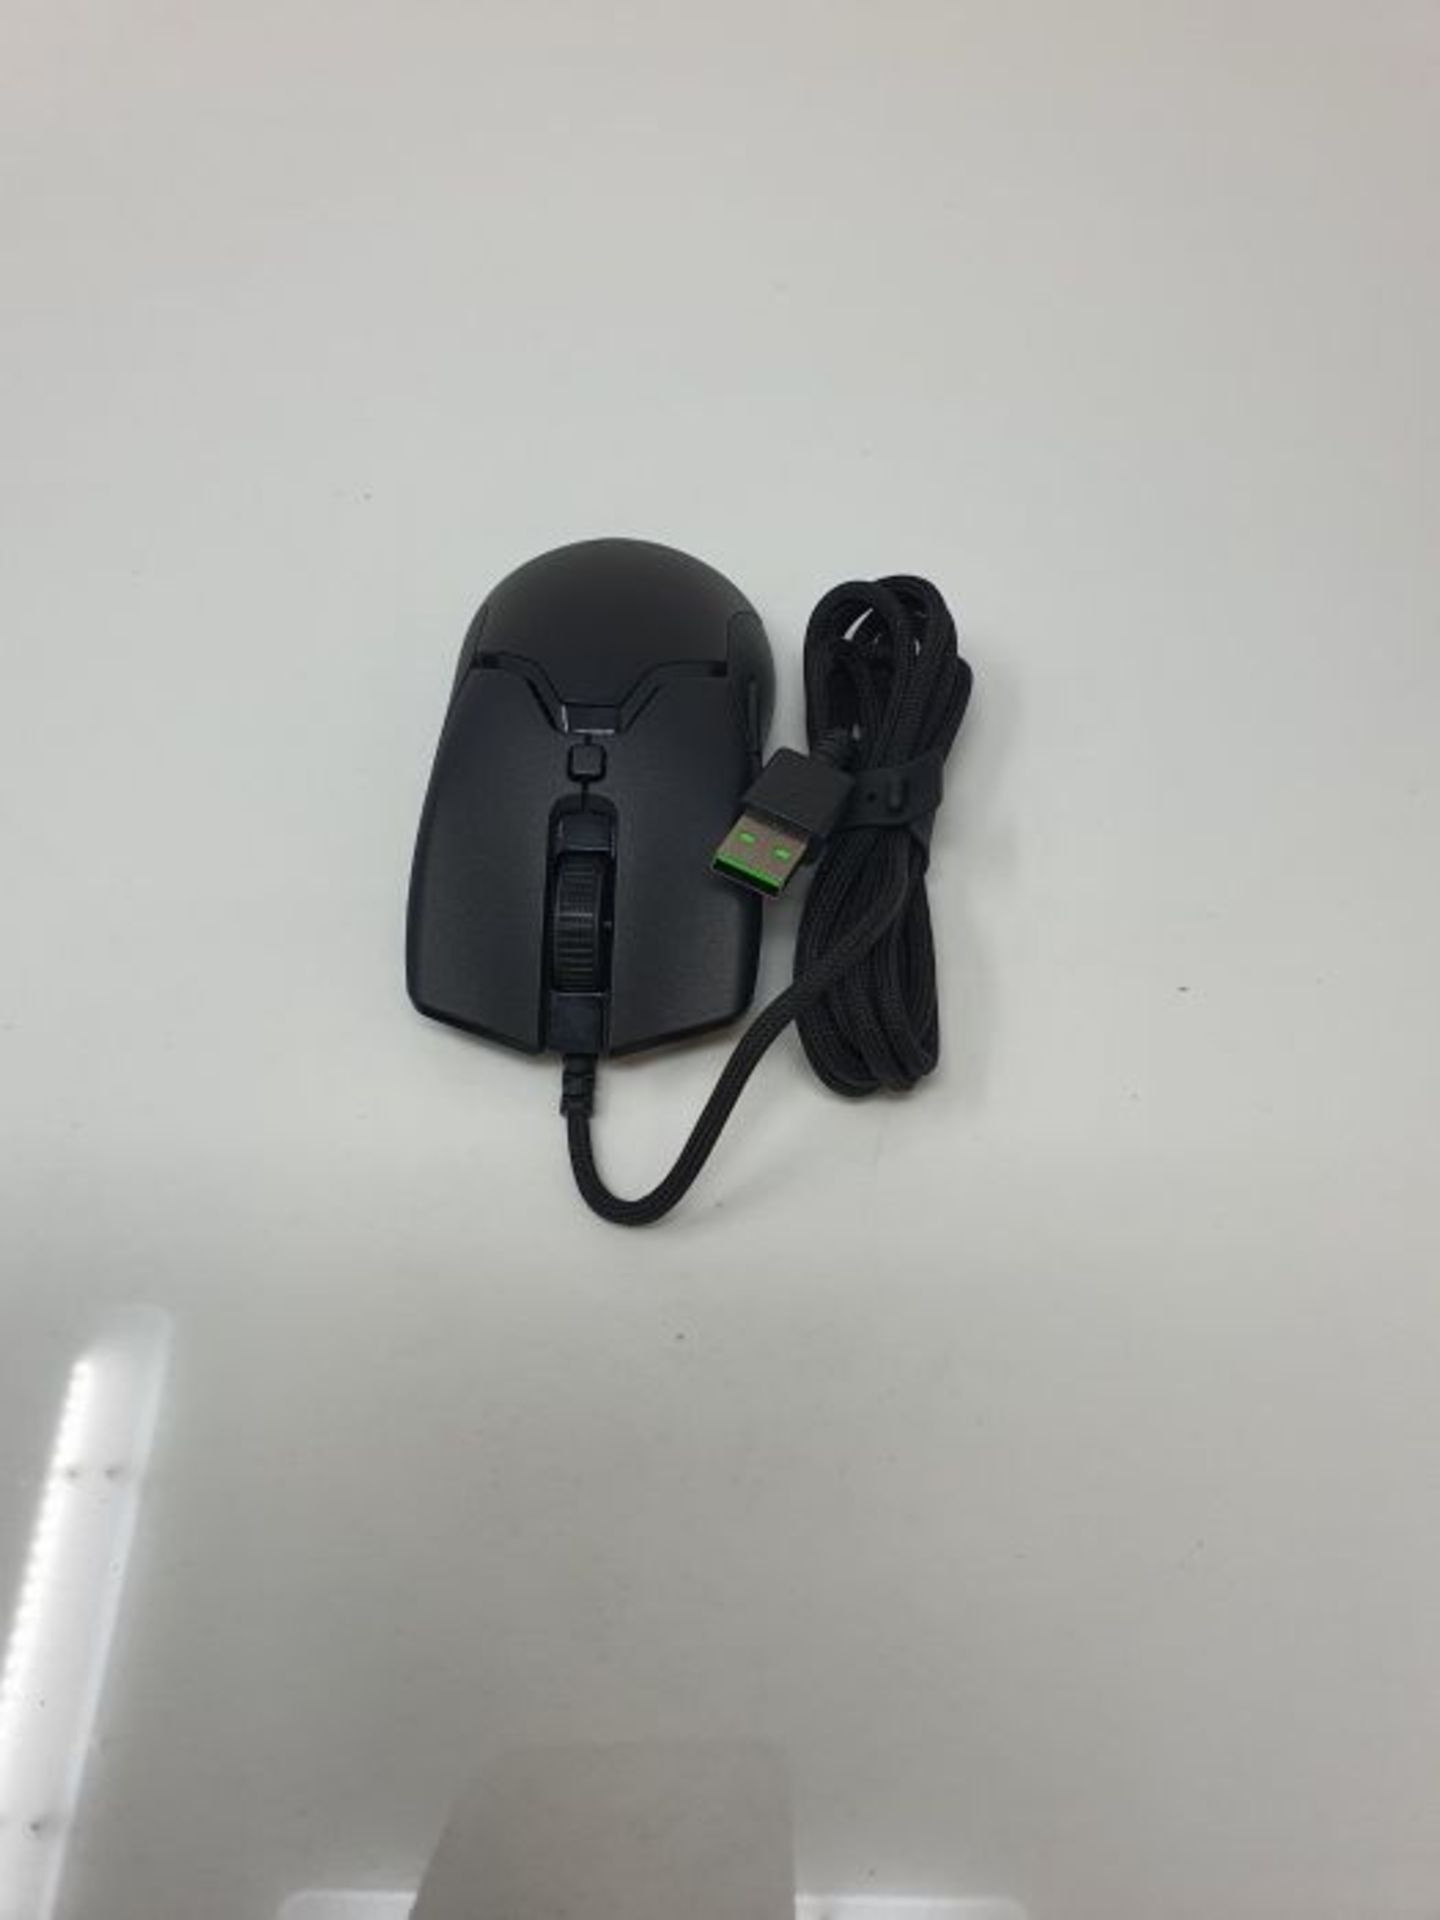 Razer Viper Mini - Ultra-Lightweight Gaming Mouse - Razer? Chroma RGB - Black - Image 3 of 3